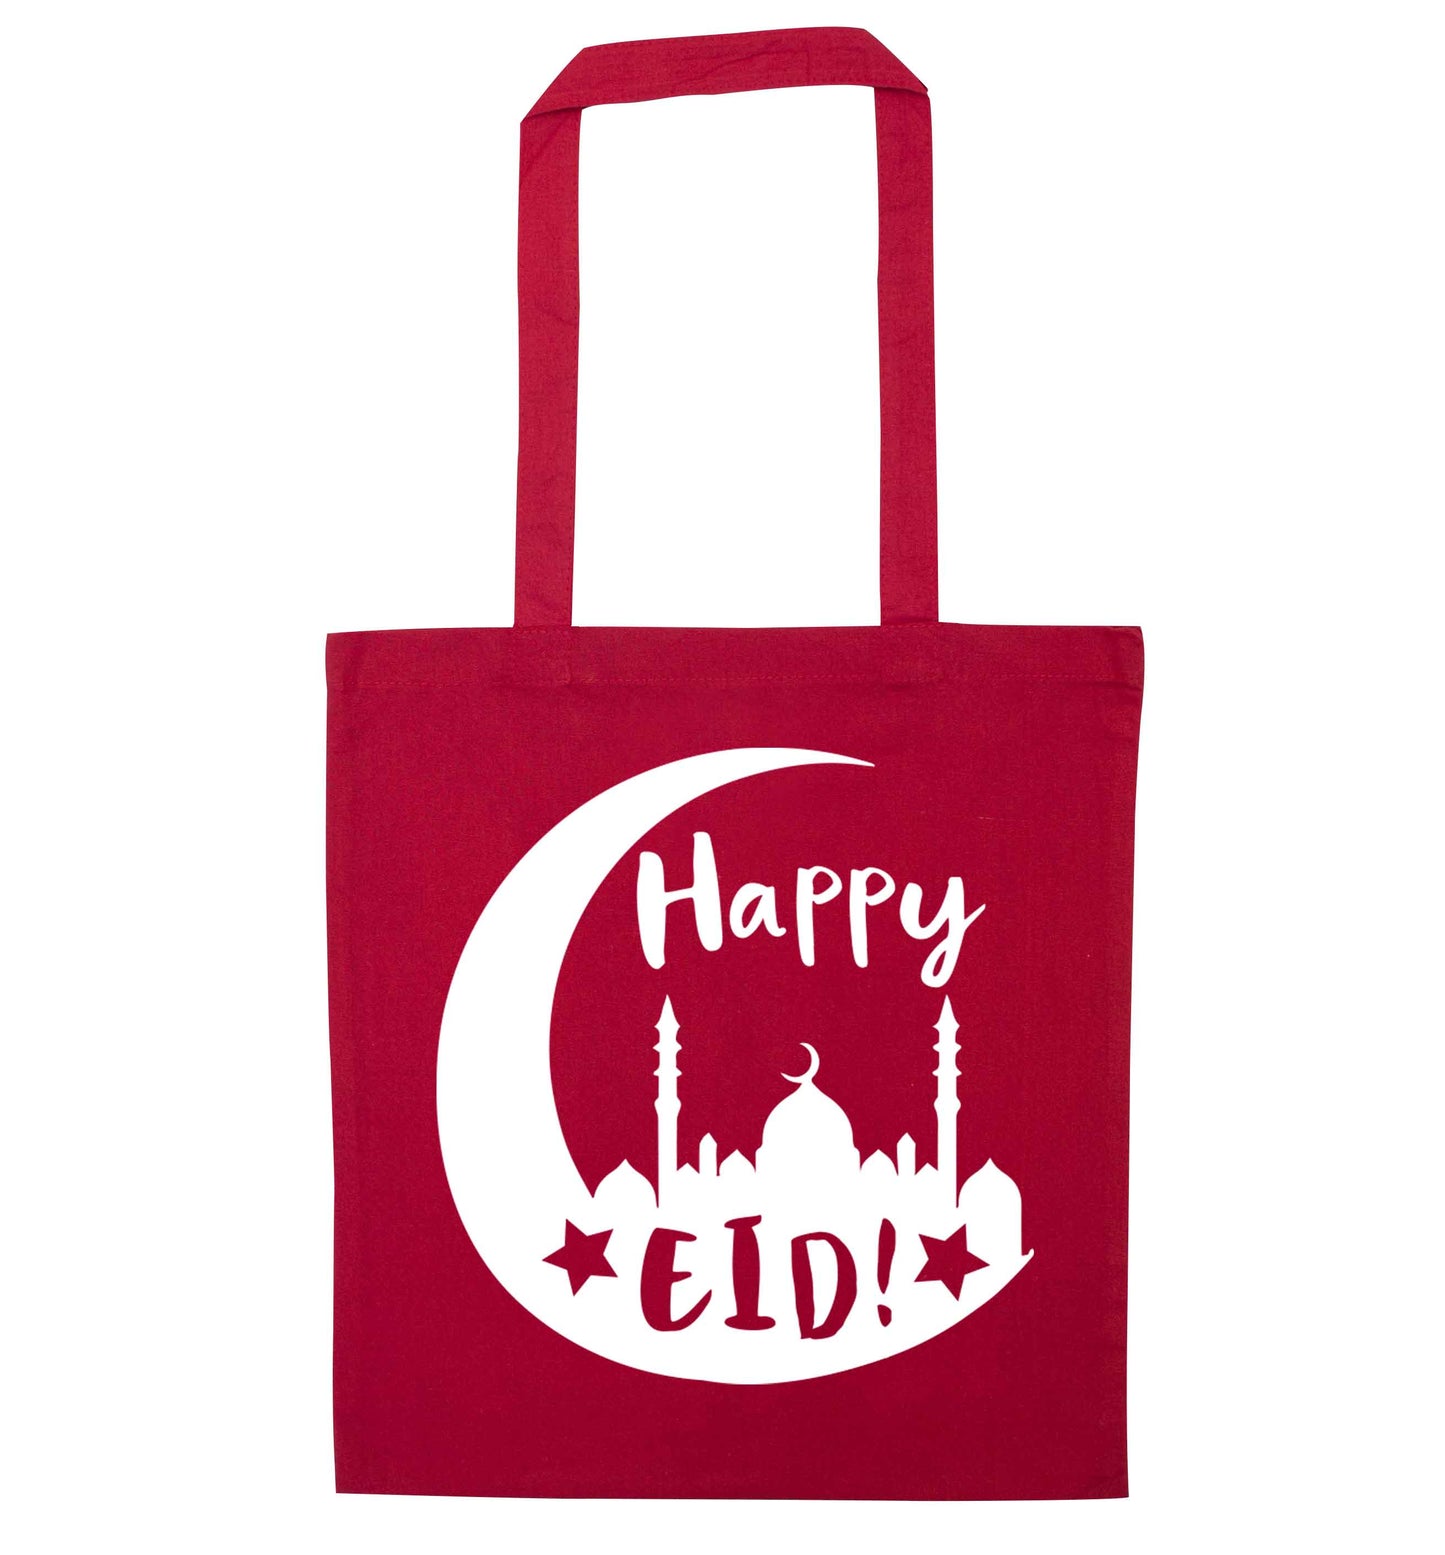 Happy Eid red tote bag